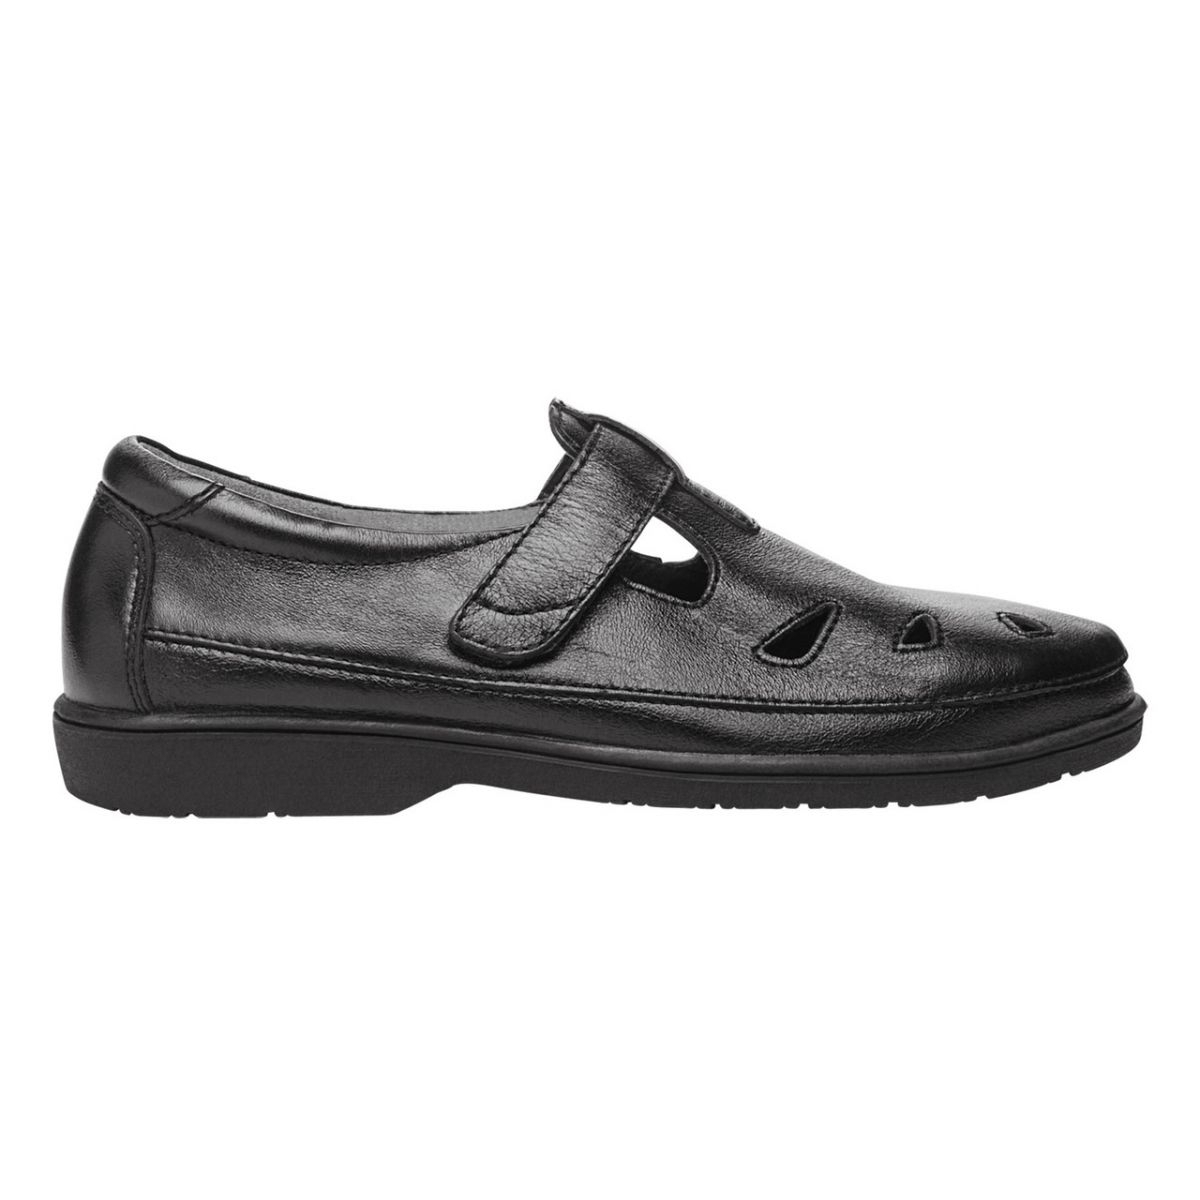 Propet Women's Ladybug T-Strap Shoe Black - W3232B BLACK - BLACK, 6.5-M